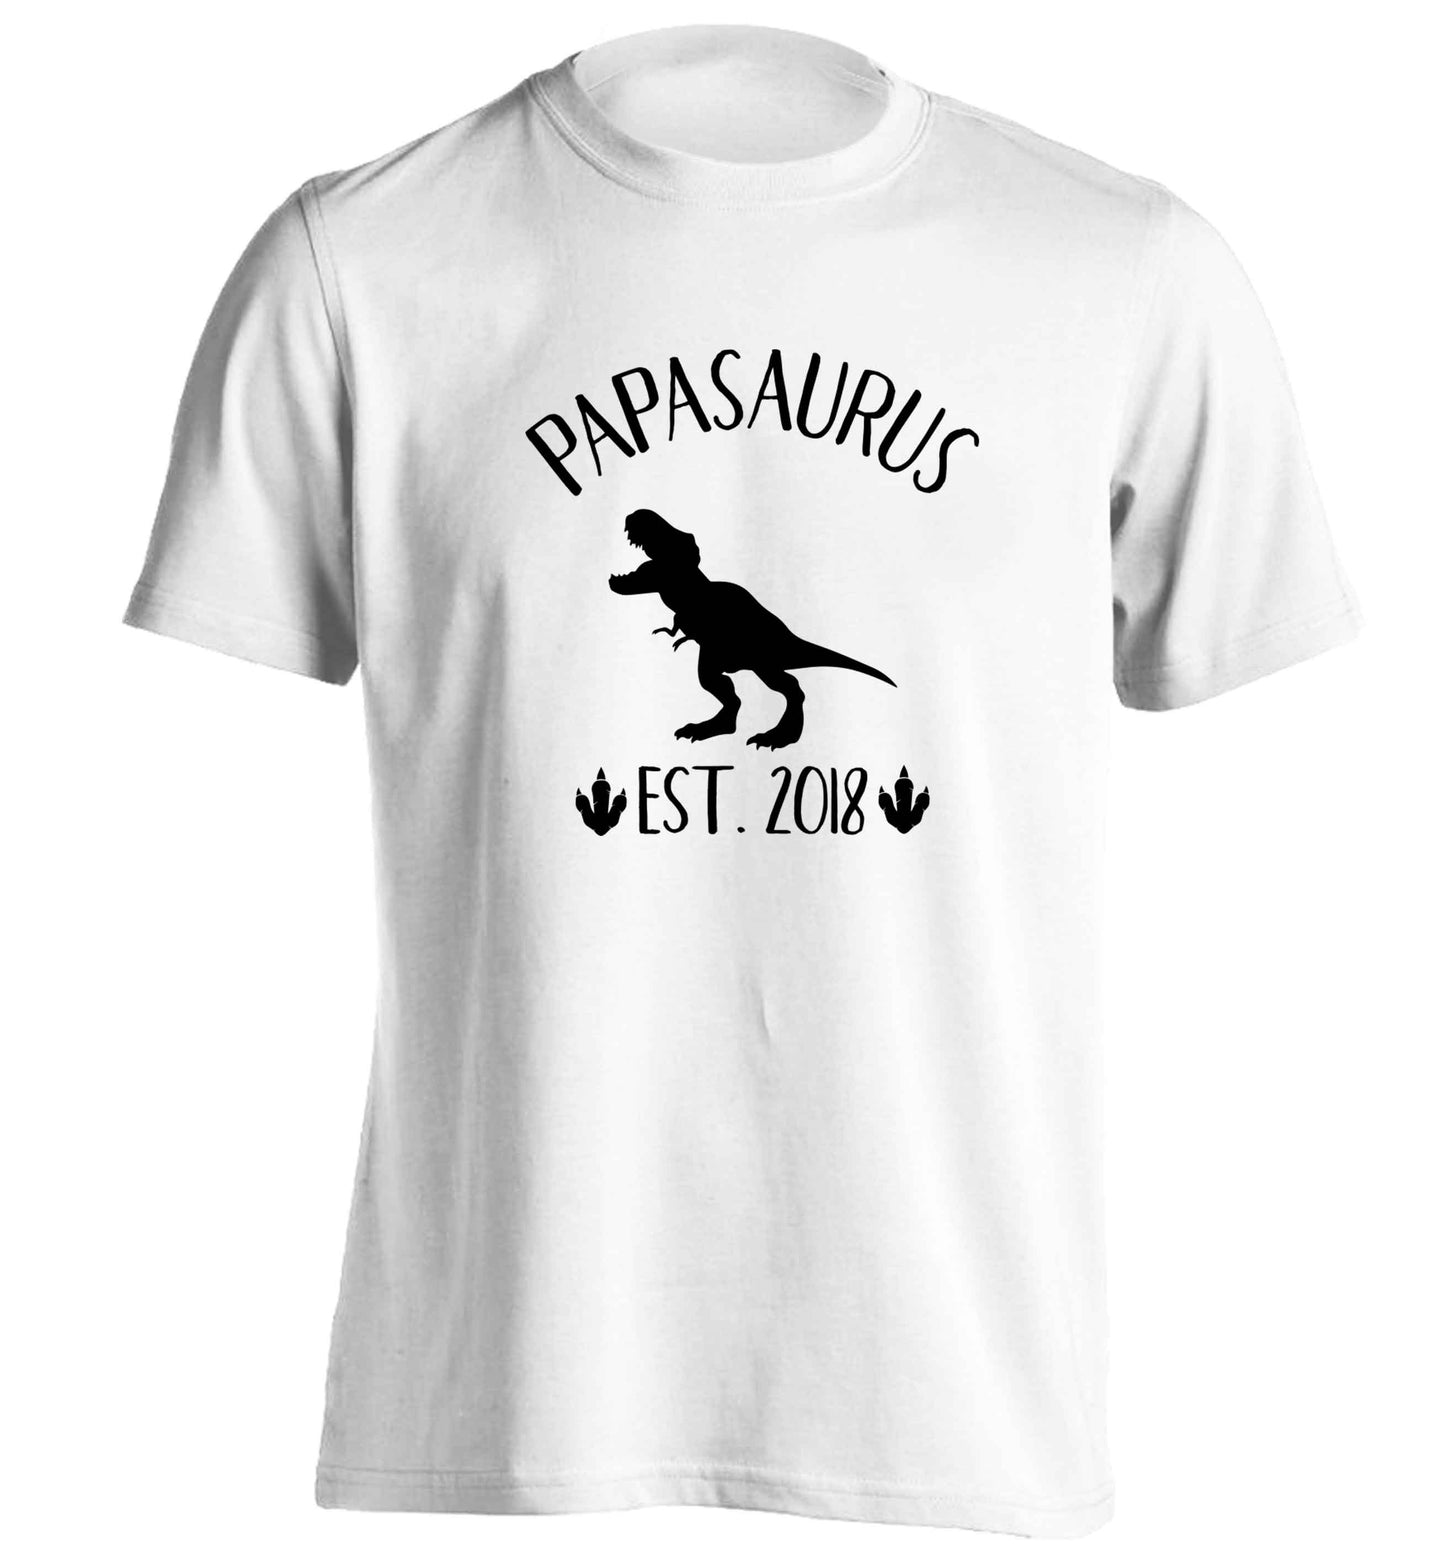 Personalised papasaurus since (custom date) adults unisex white Tshirt 2XL